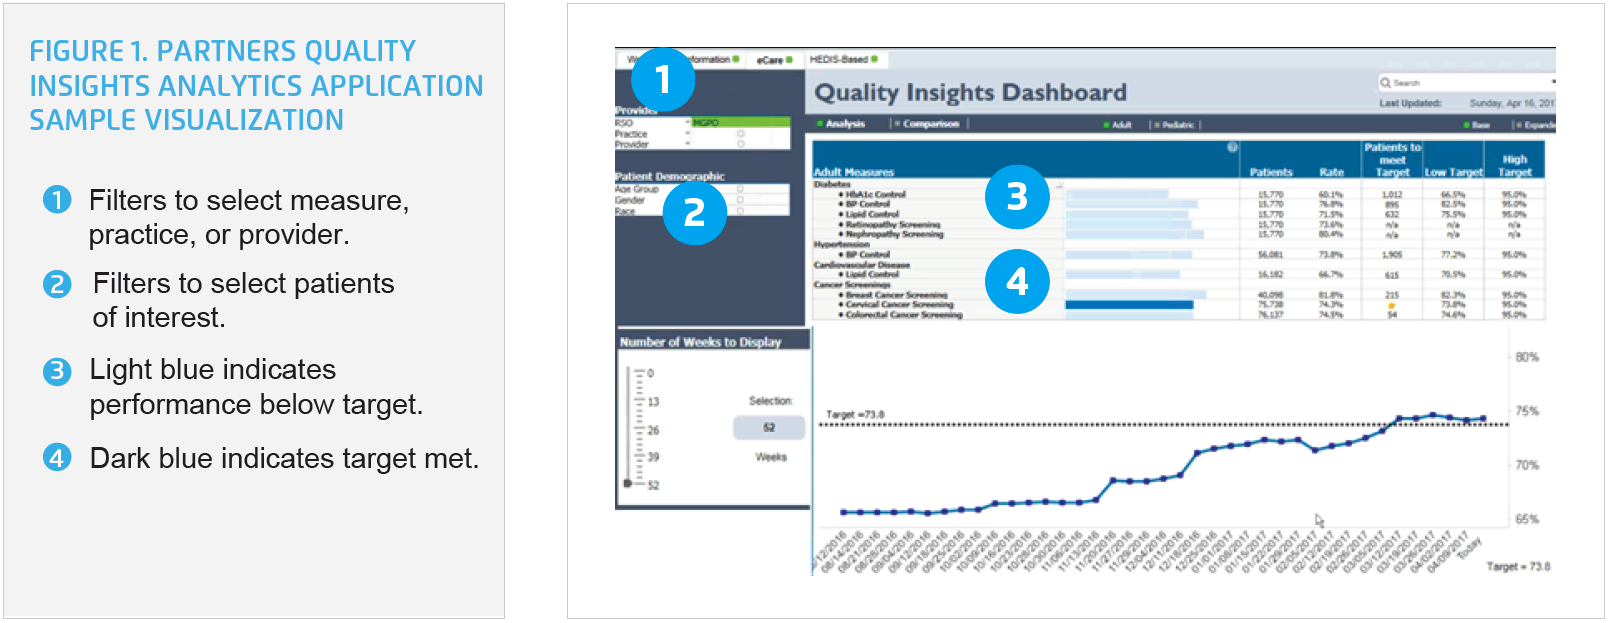 partners-quality-insights-analytics-app